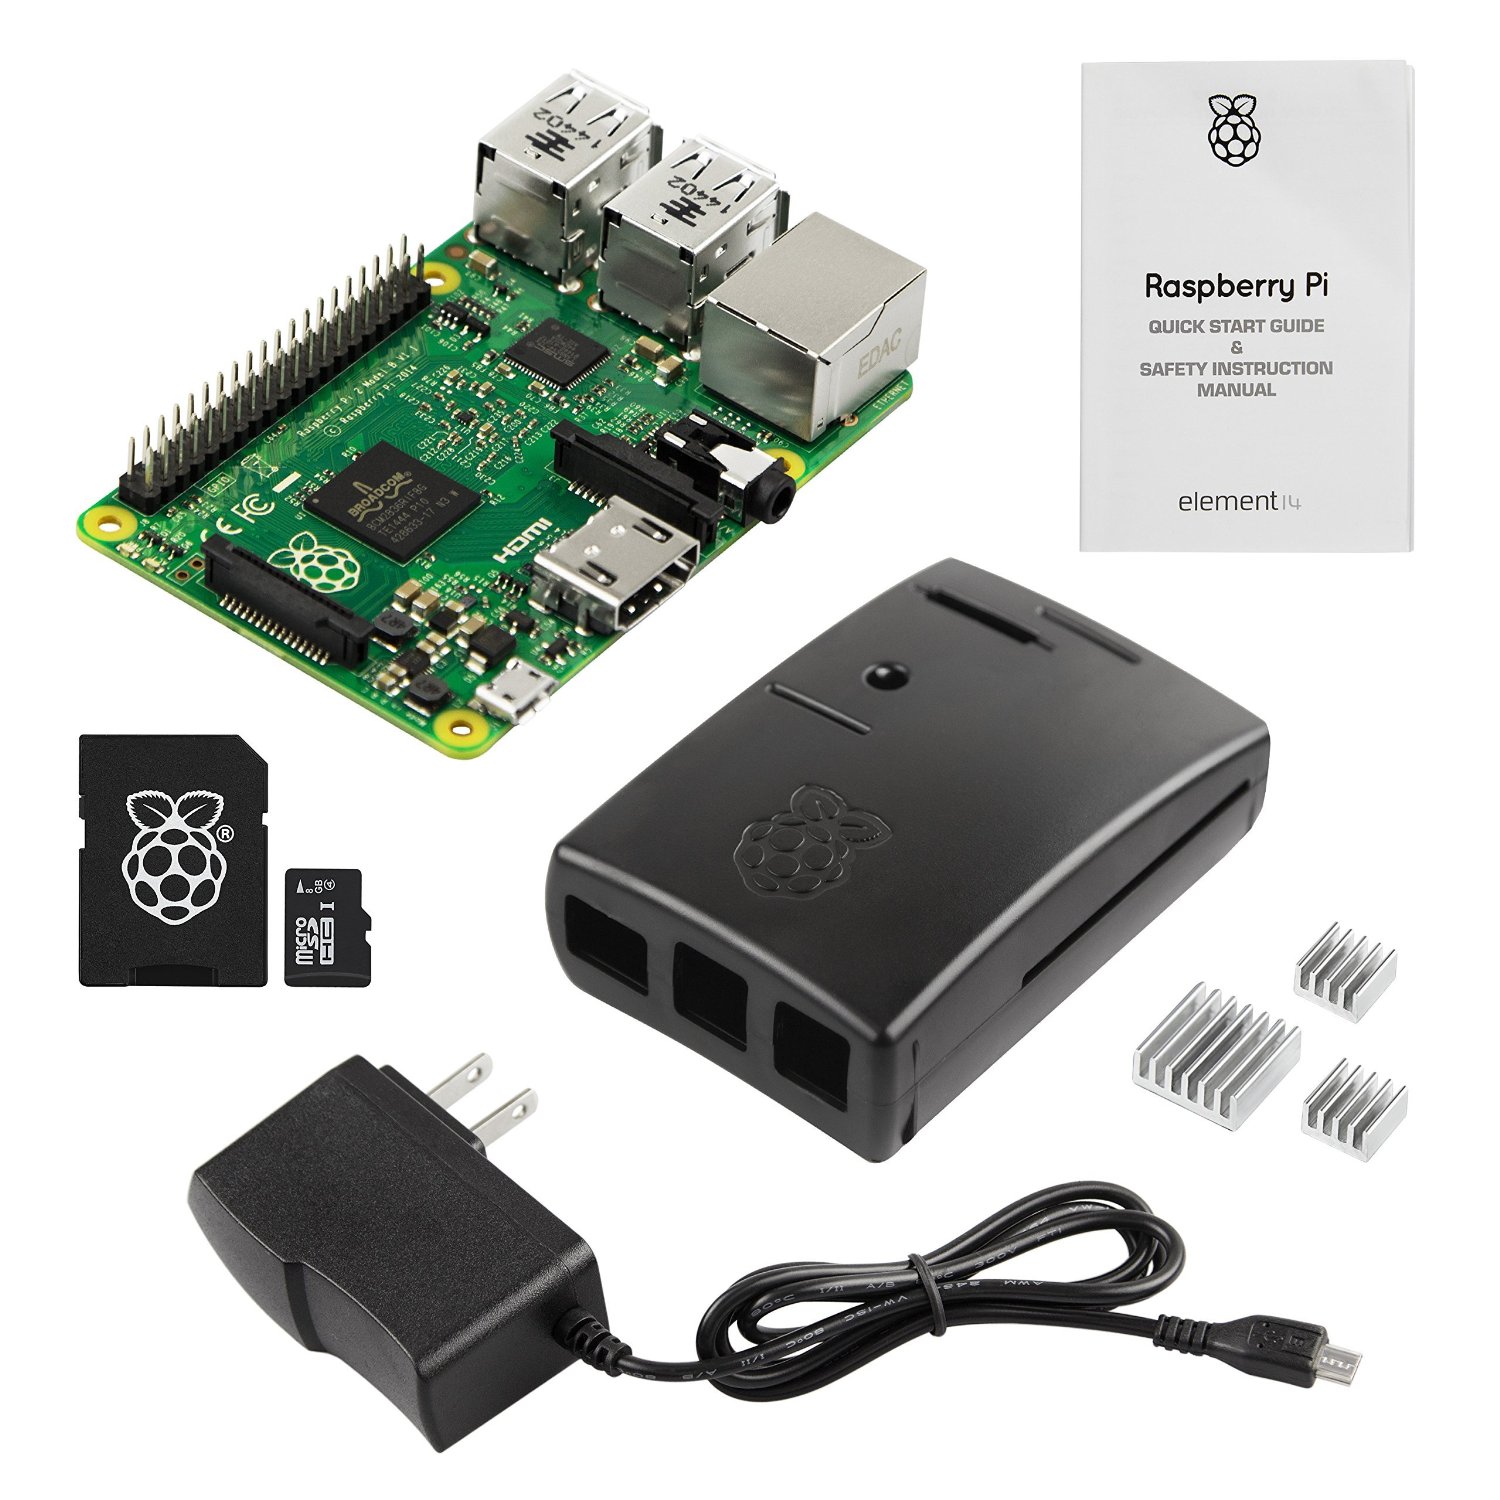 10 Best Raspberry Pi Starter Kits That Make Development Easy 0468